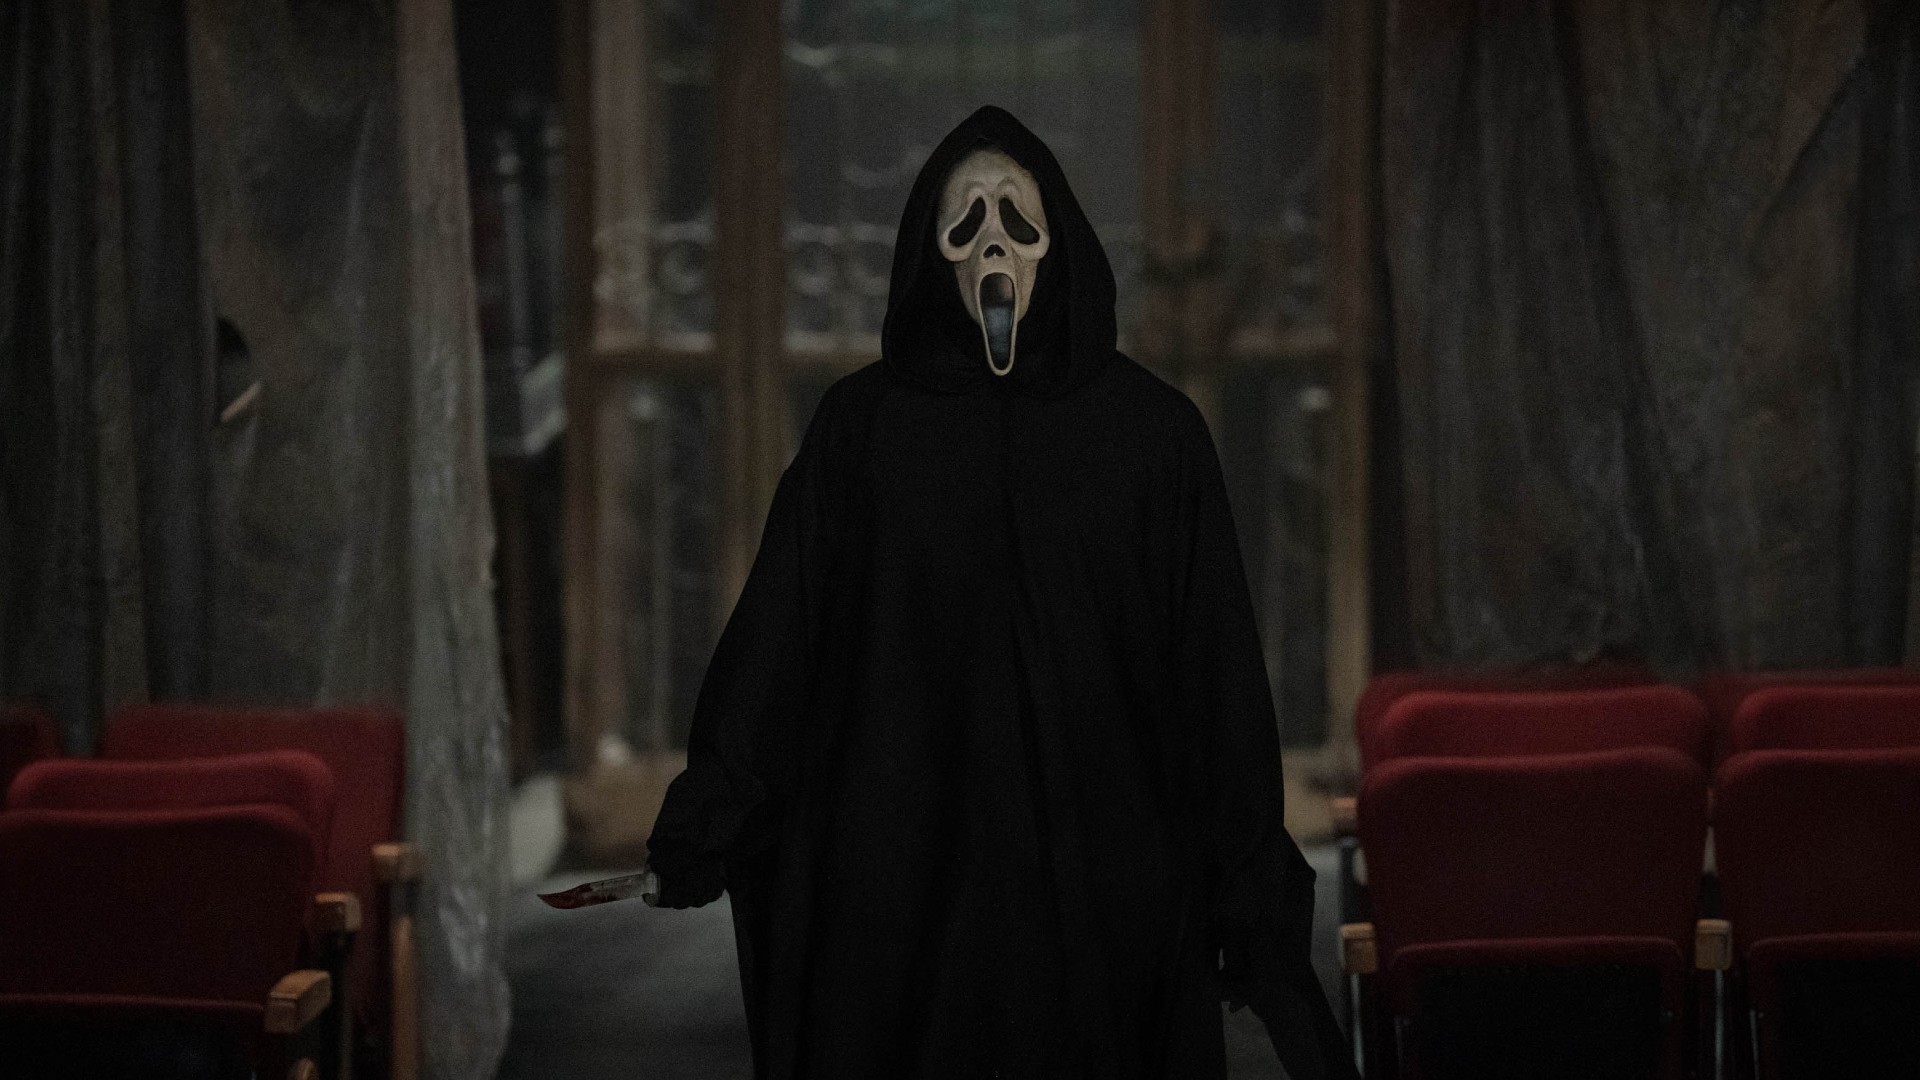 Ghostface brandishes a knife in a still from Scream VI